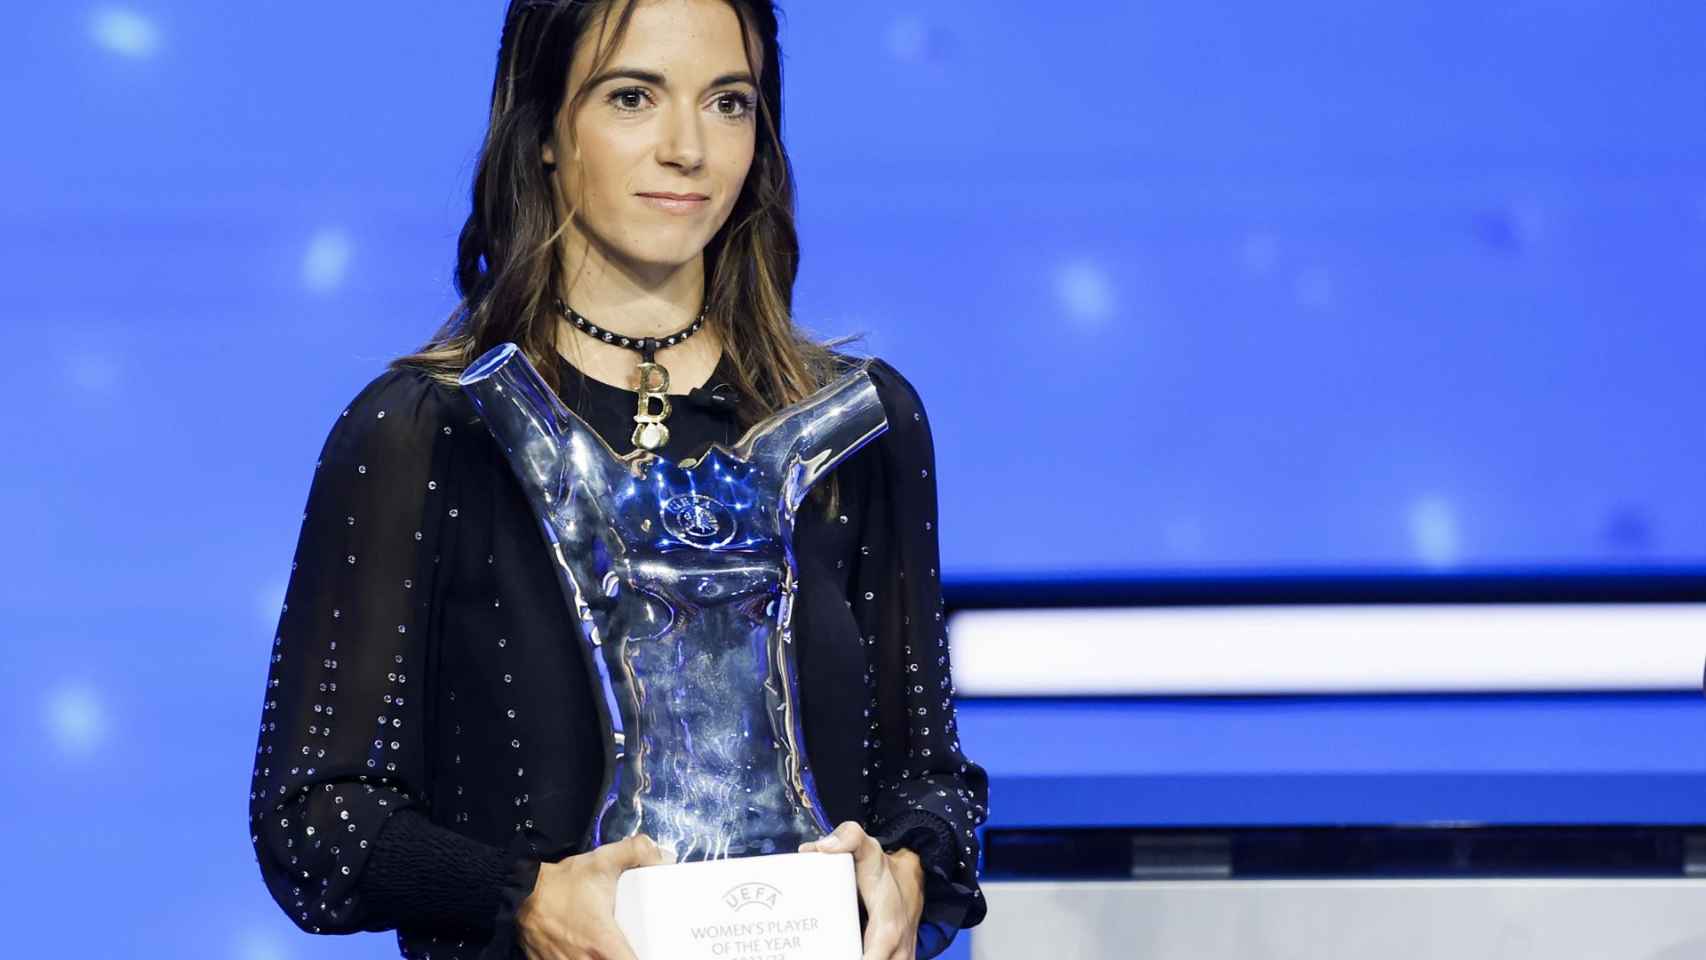 Aitana Bonmatí, mejor jugadora de la UEFA